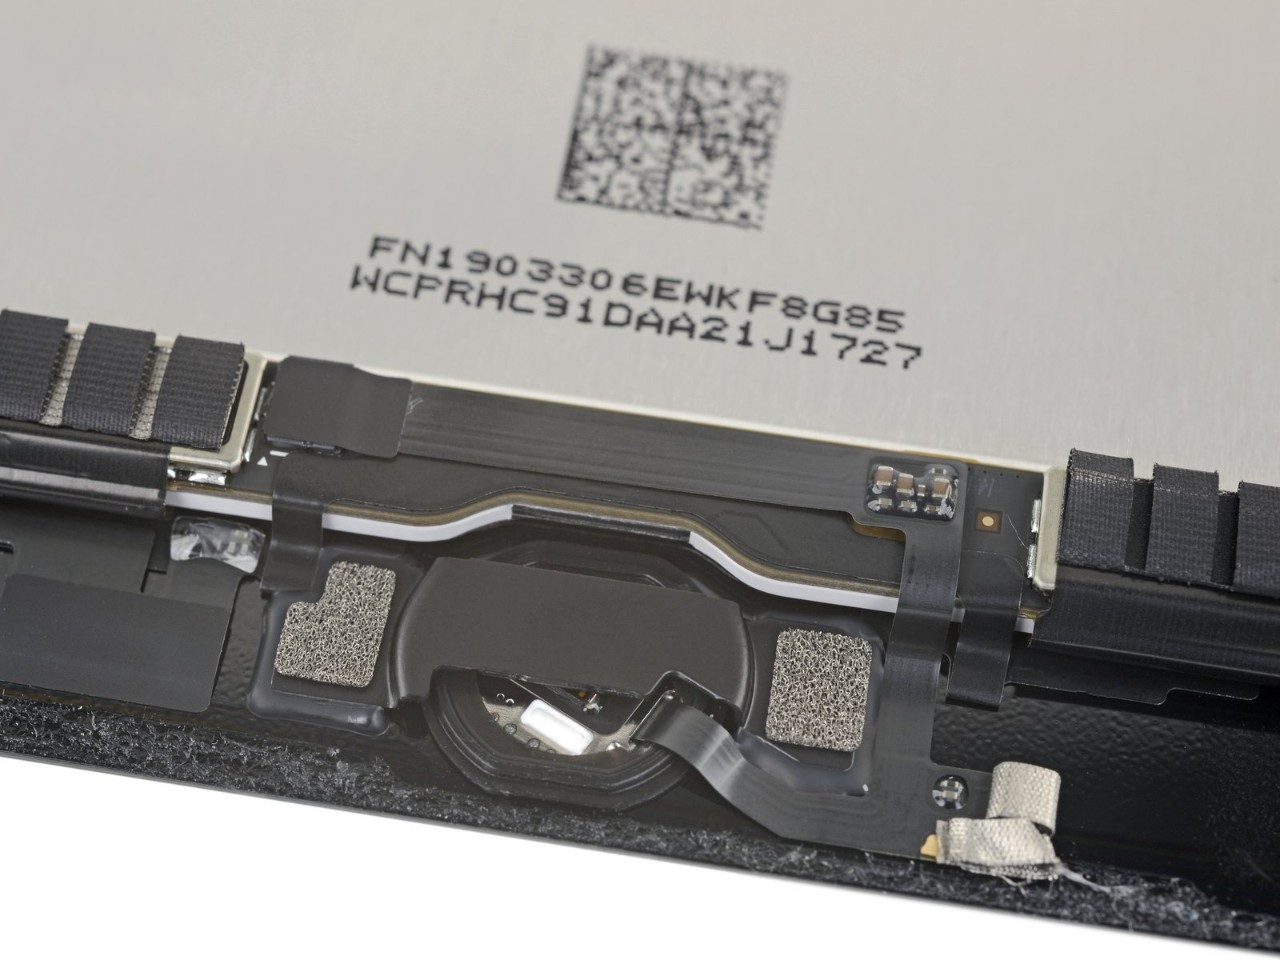 iPad mini5拆卸详尽分析，运行内存和指纹识别提高 电池电量不会改变